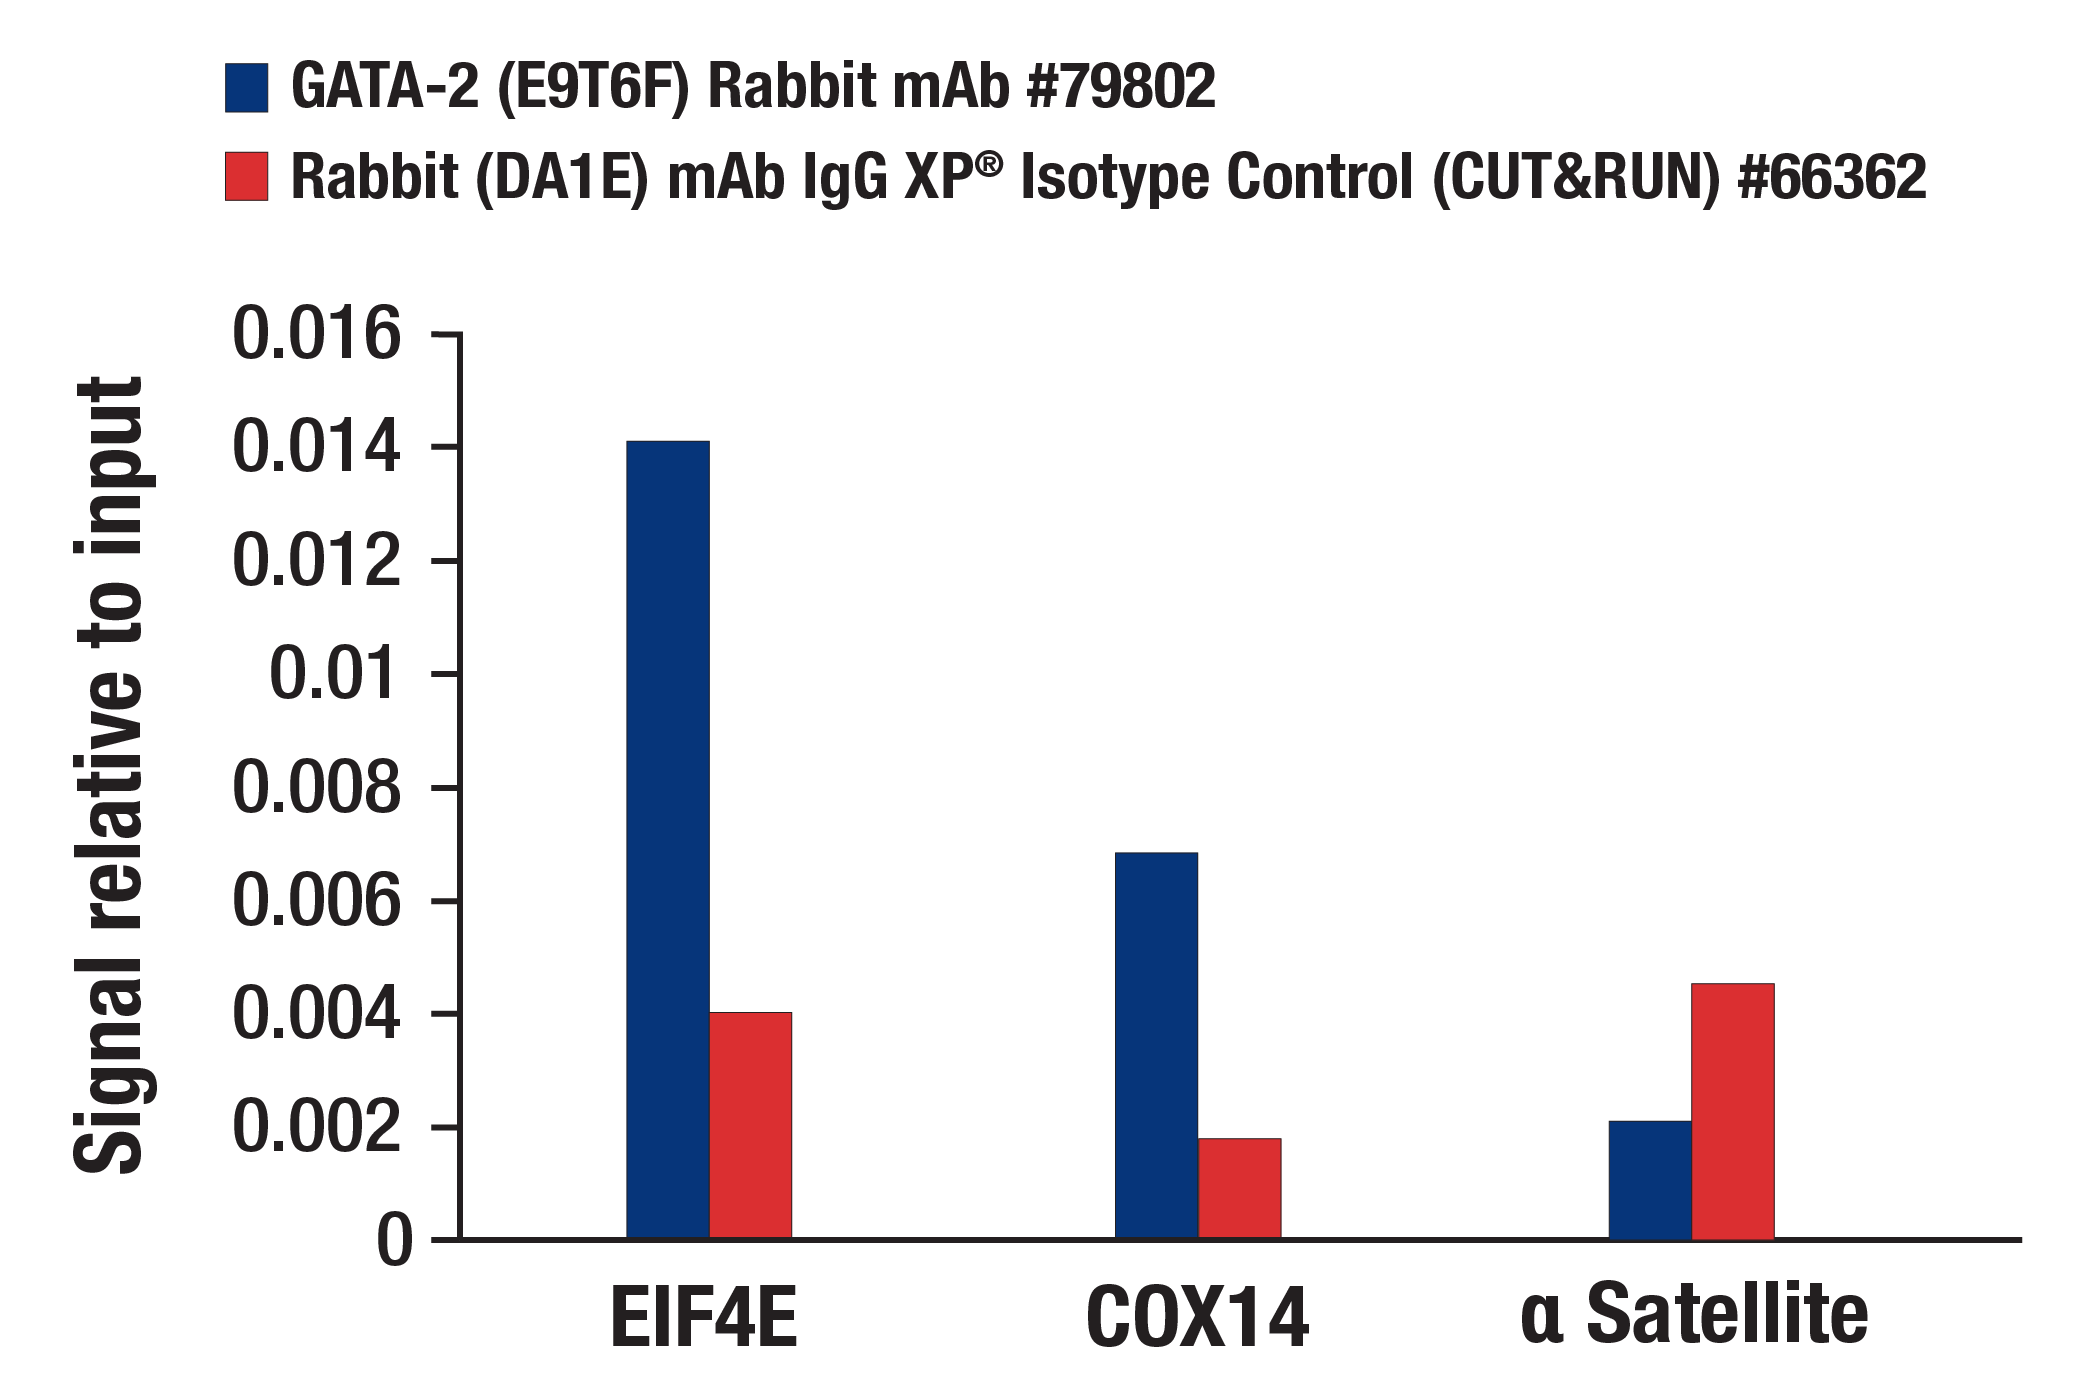 CUT and RUN Image 3: GATA-2 (E9T6F) Rabbit mAb